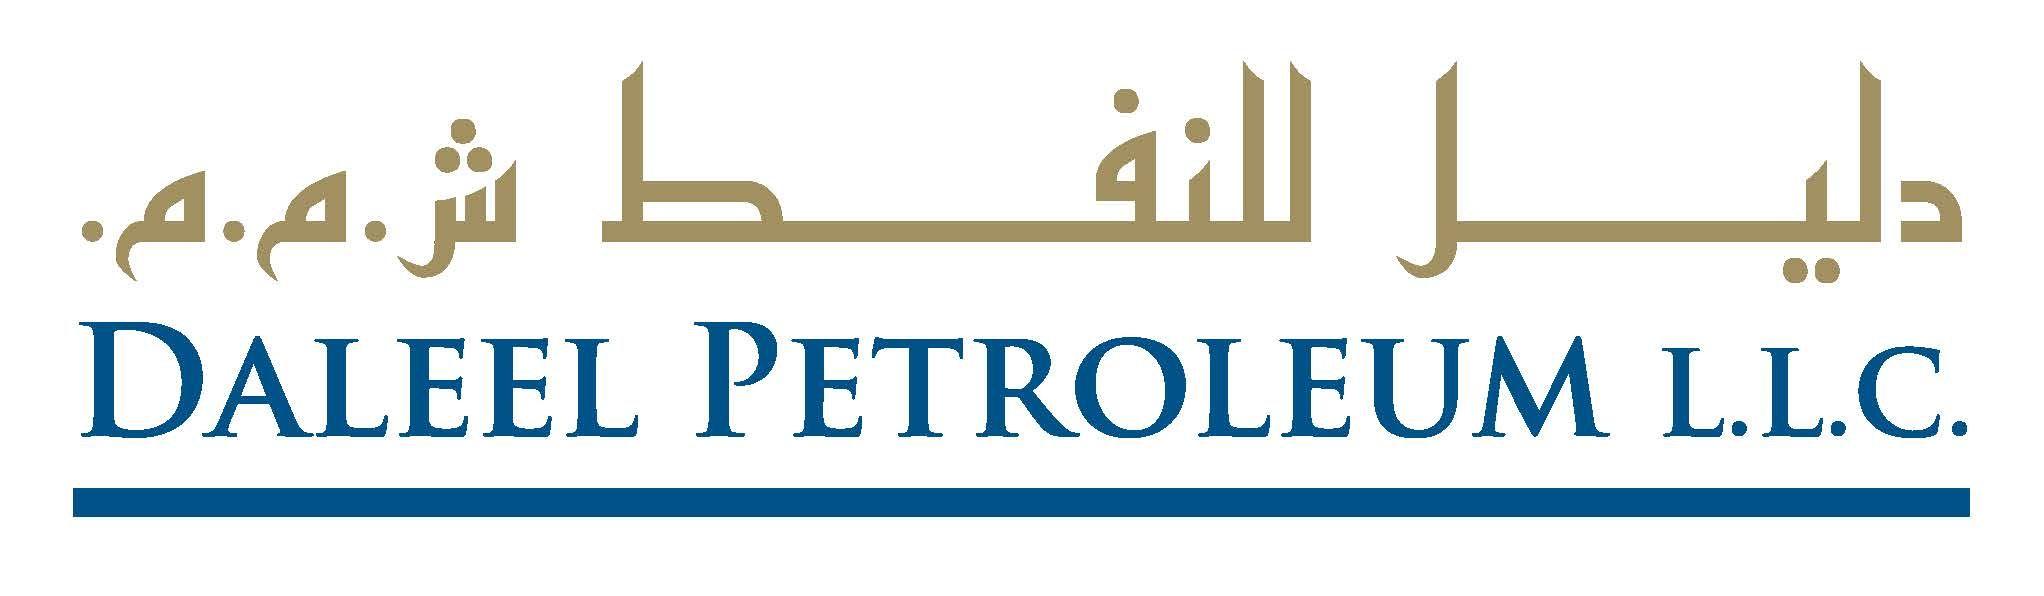 China National Petroleum Logo - DALEEL PETROLEUM L.L.C - Oman